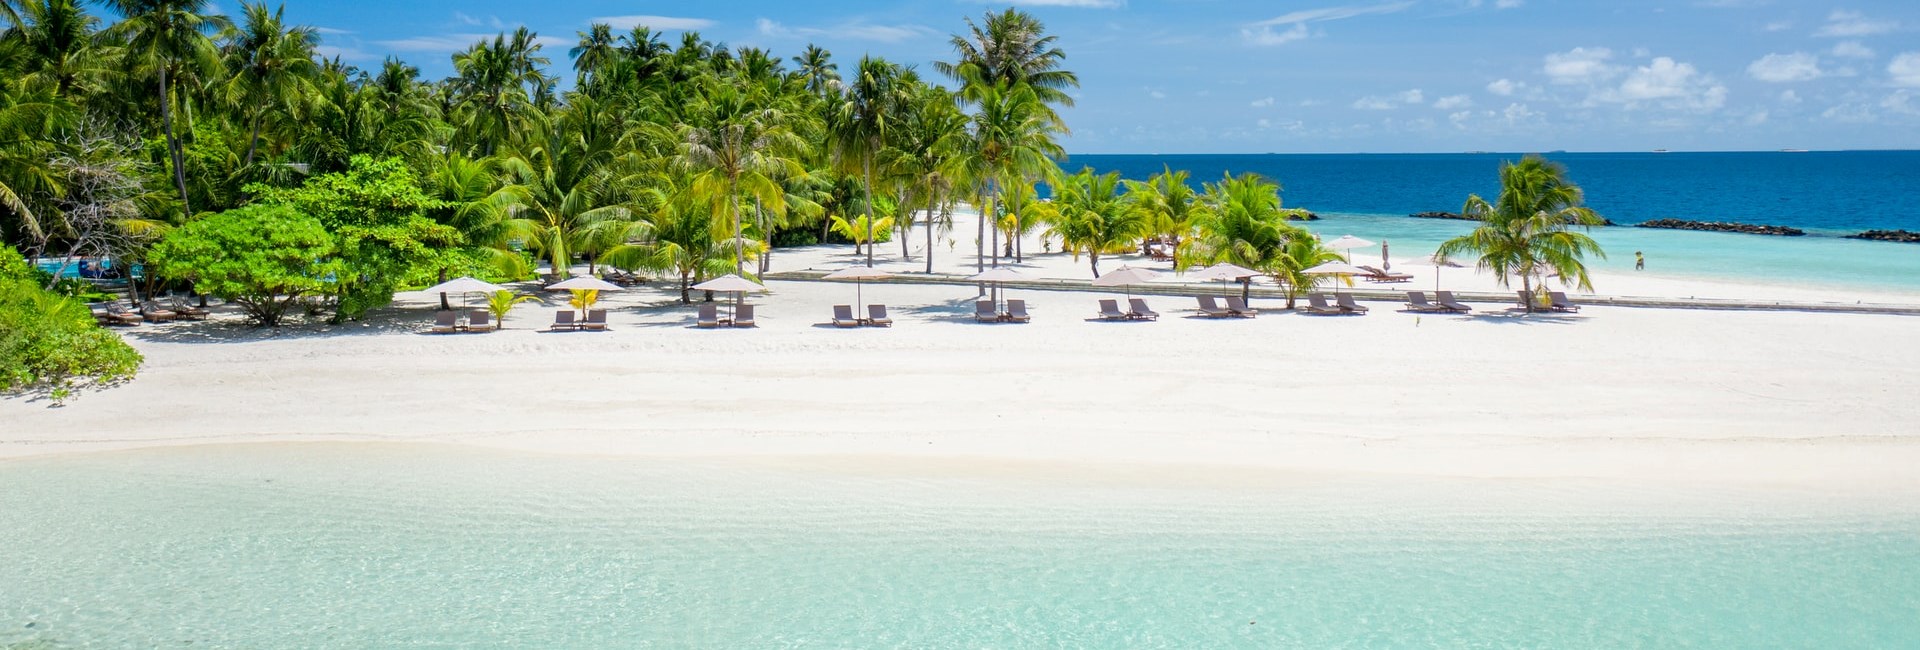 Sun loungers out on a small beach on a tropical island